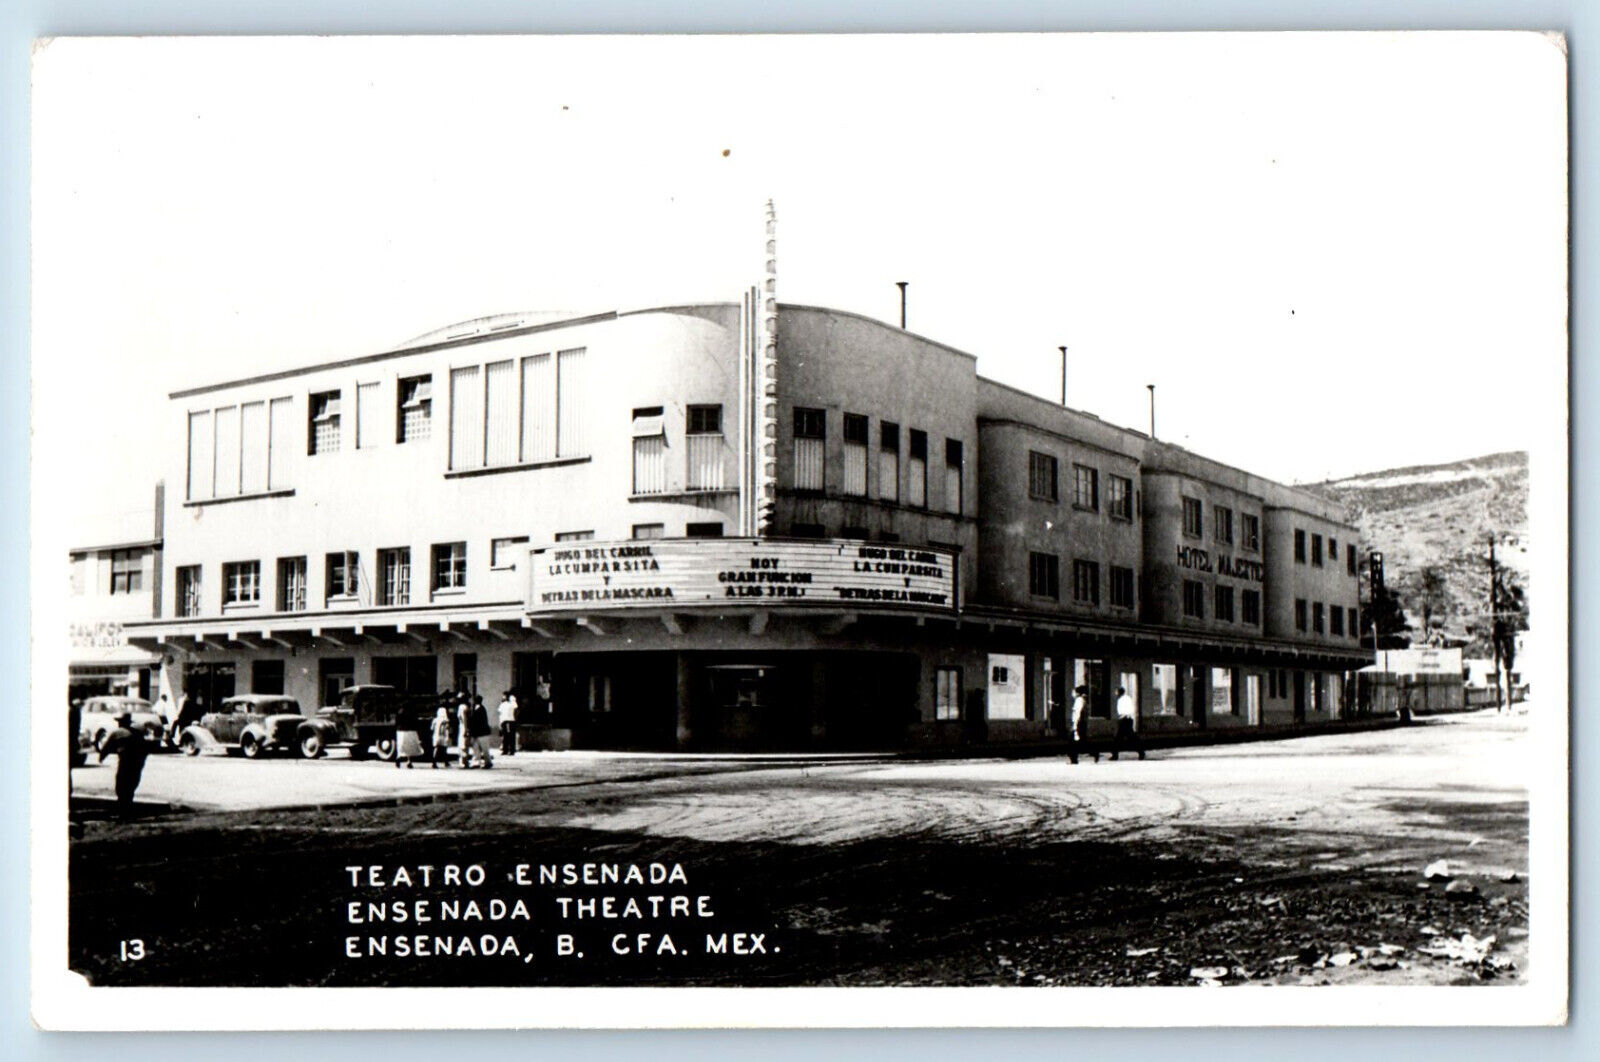 Ensenada Baja California Mexico Postcard Ensenada Theatre c1940's RPPC Photo